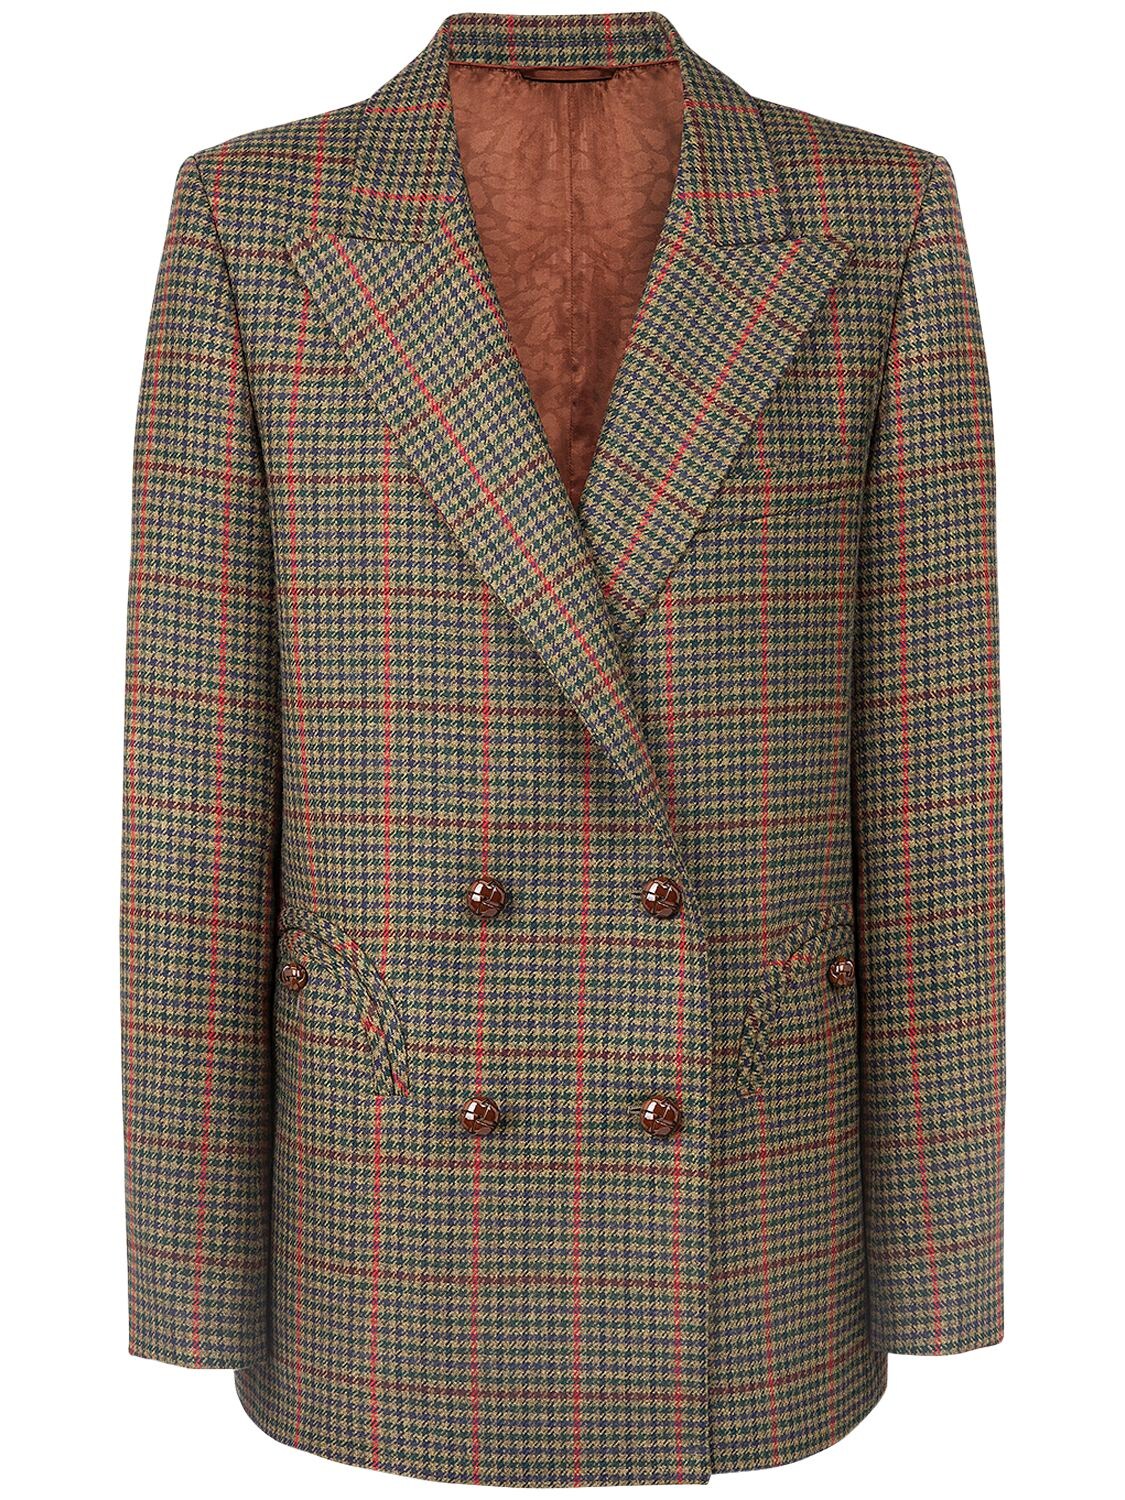 BLAZÉ MILANO “DRUM BEAT”羊毛双排扣西装夹克,72IXYG001-RJEGR1JFRU41